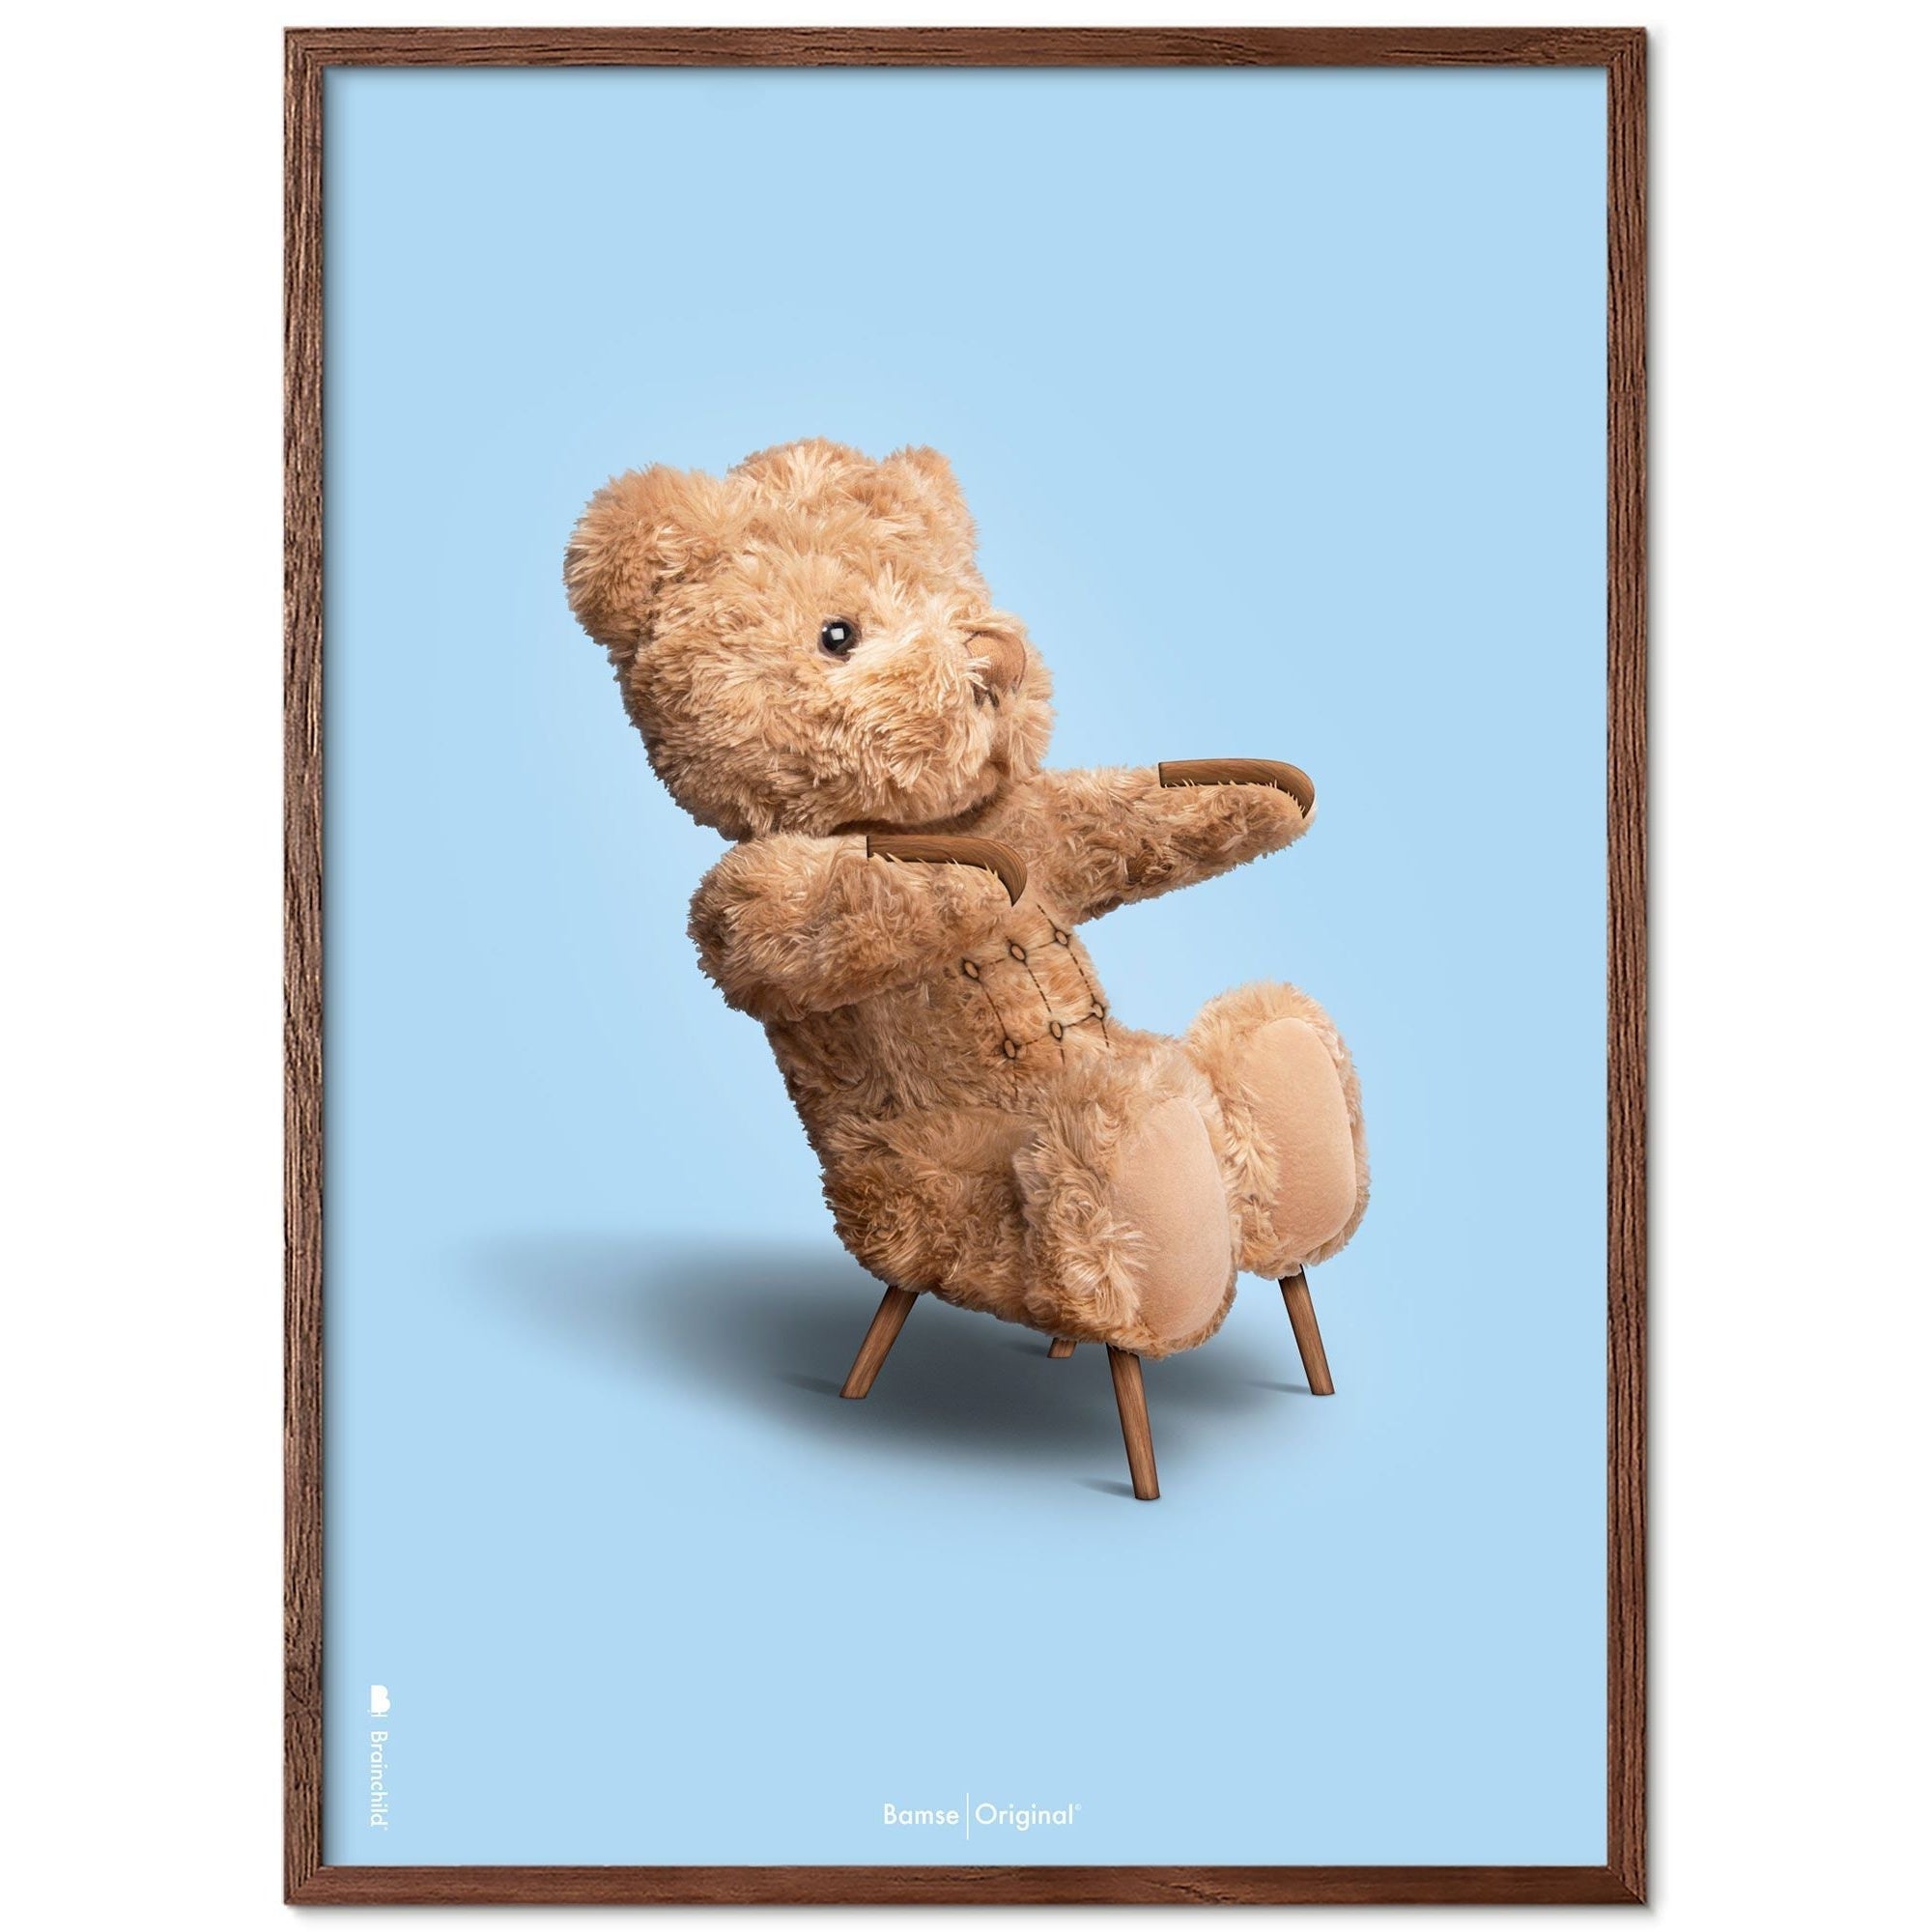 Brainchild Teddybeer klassieke poster donker hout frame ram a5, lichtblauwe achtergrond